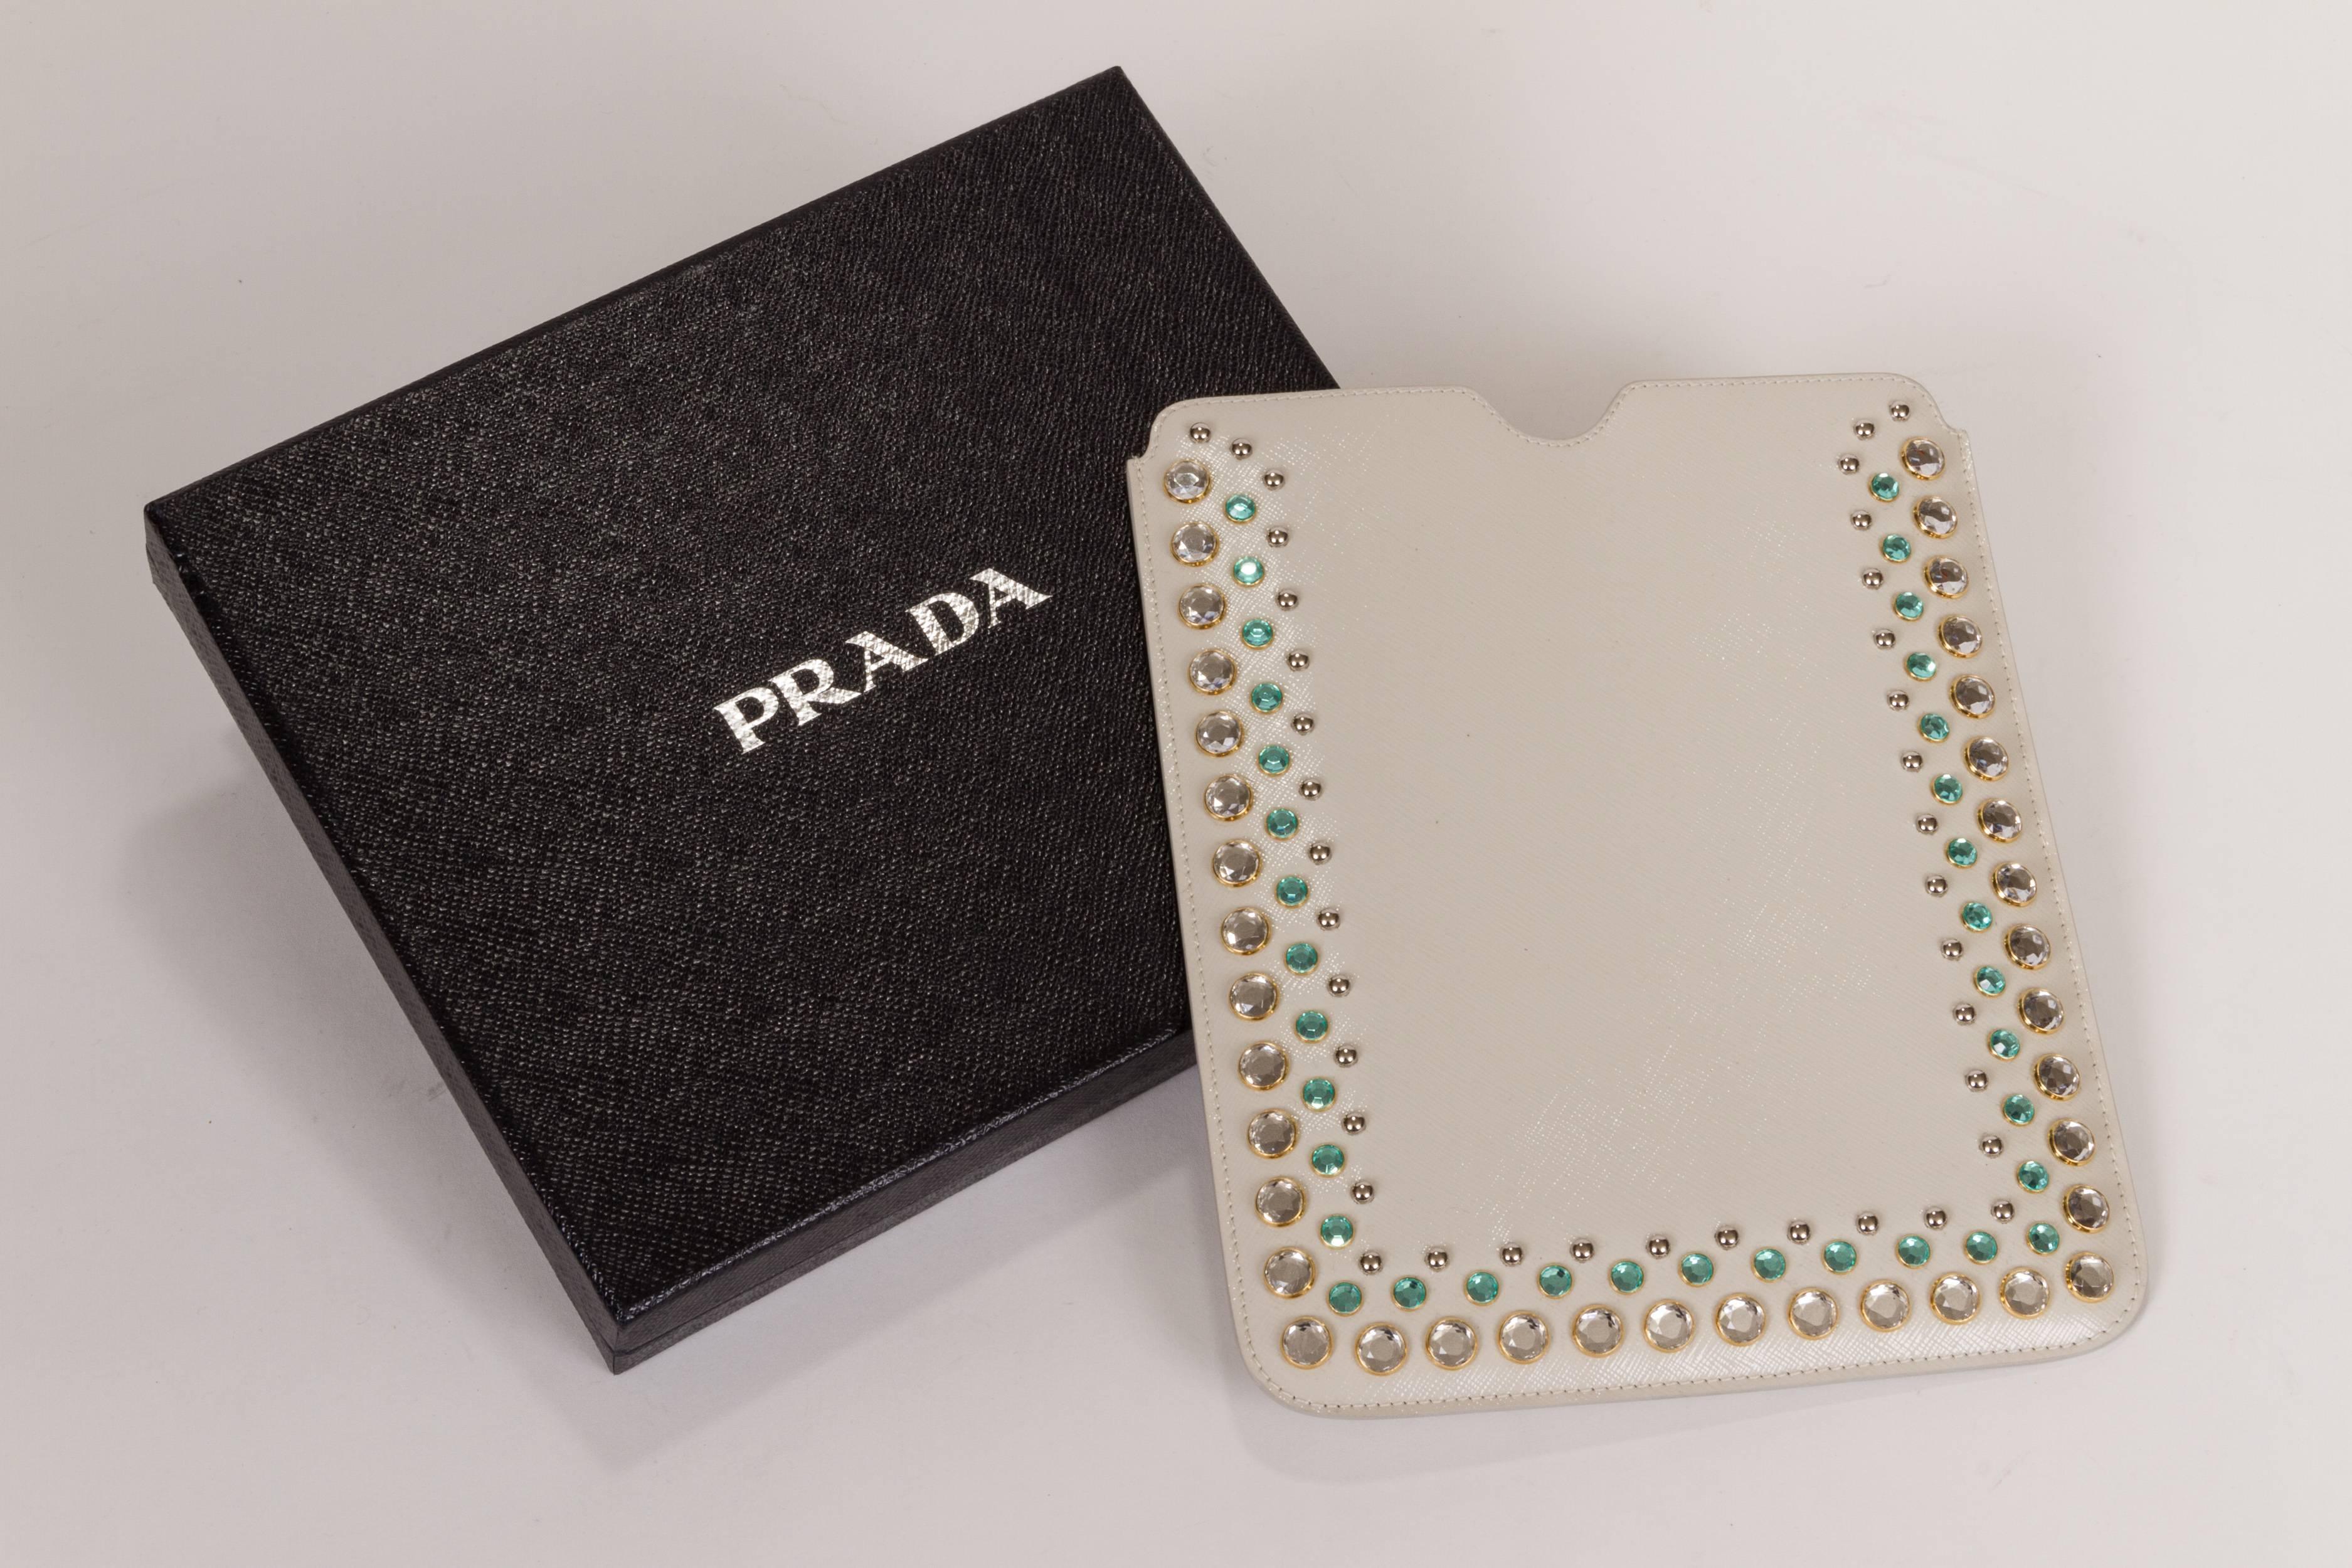 Prada Ipad Case - For Sale on 1stDibs | prada ipad bag, prada ipad cover